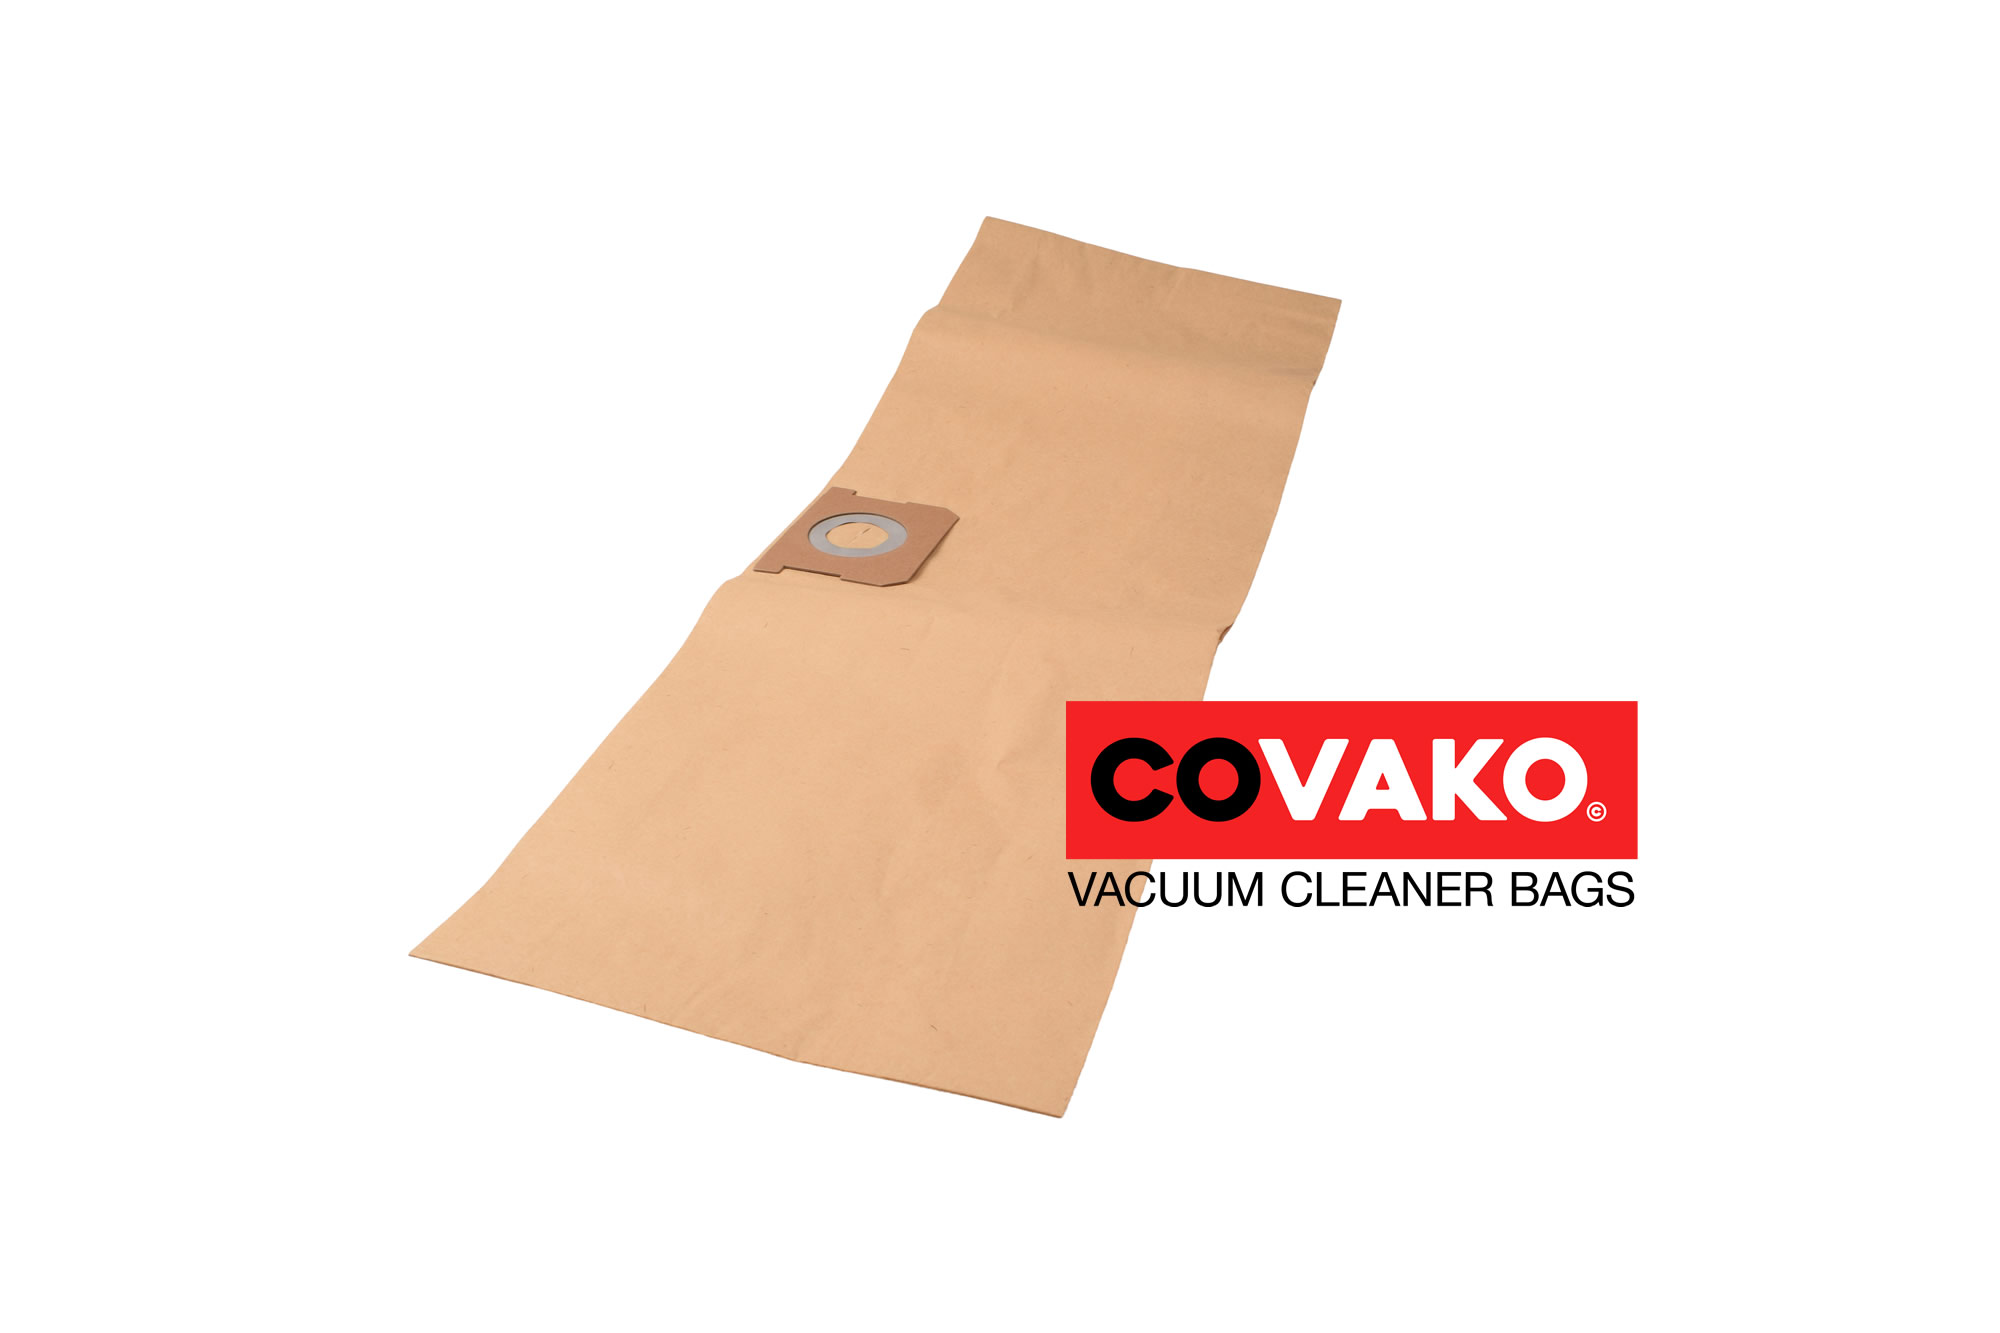 Obi NTS 20/1400 / Paper - Obi vacuum cleaner bags